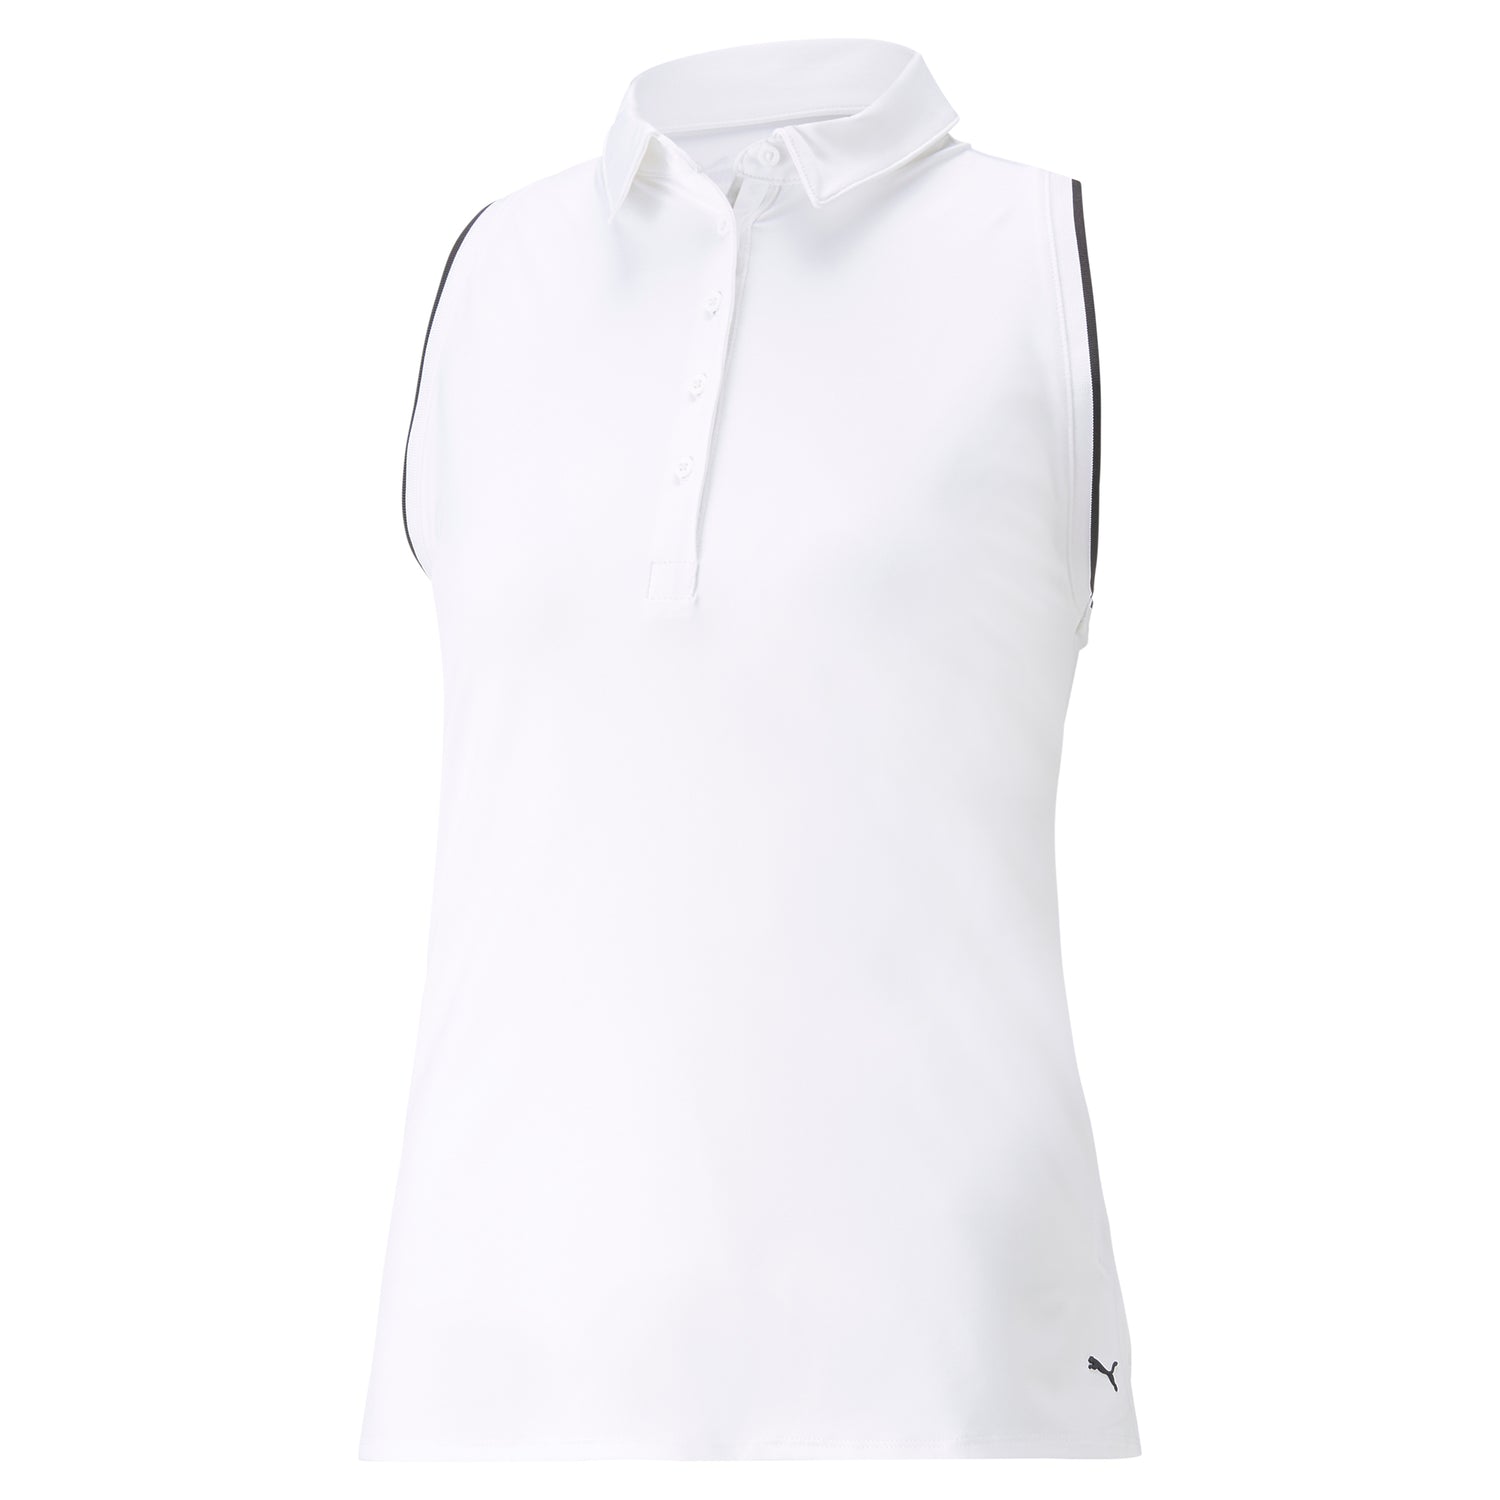 Sleeveless ProCool Women's Golf Shirt (White/Black)